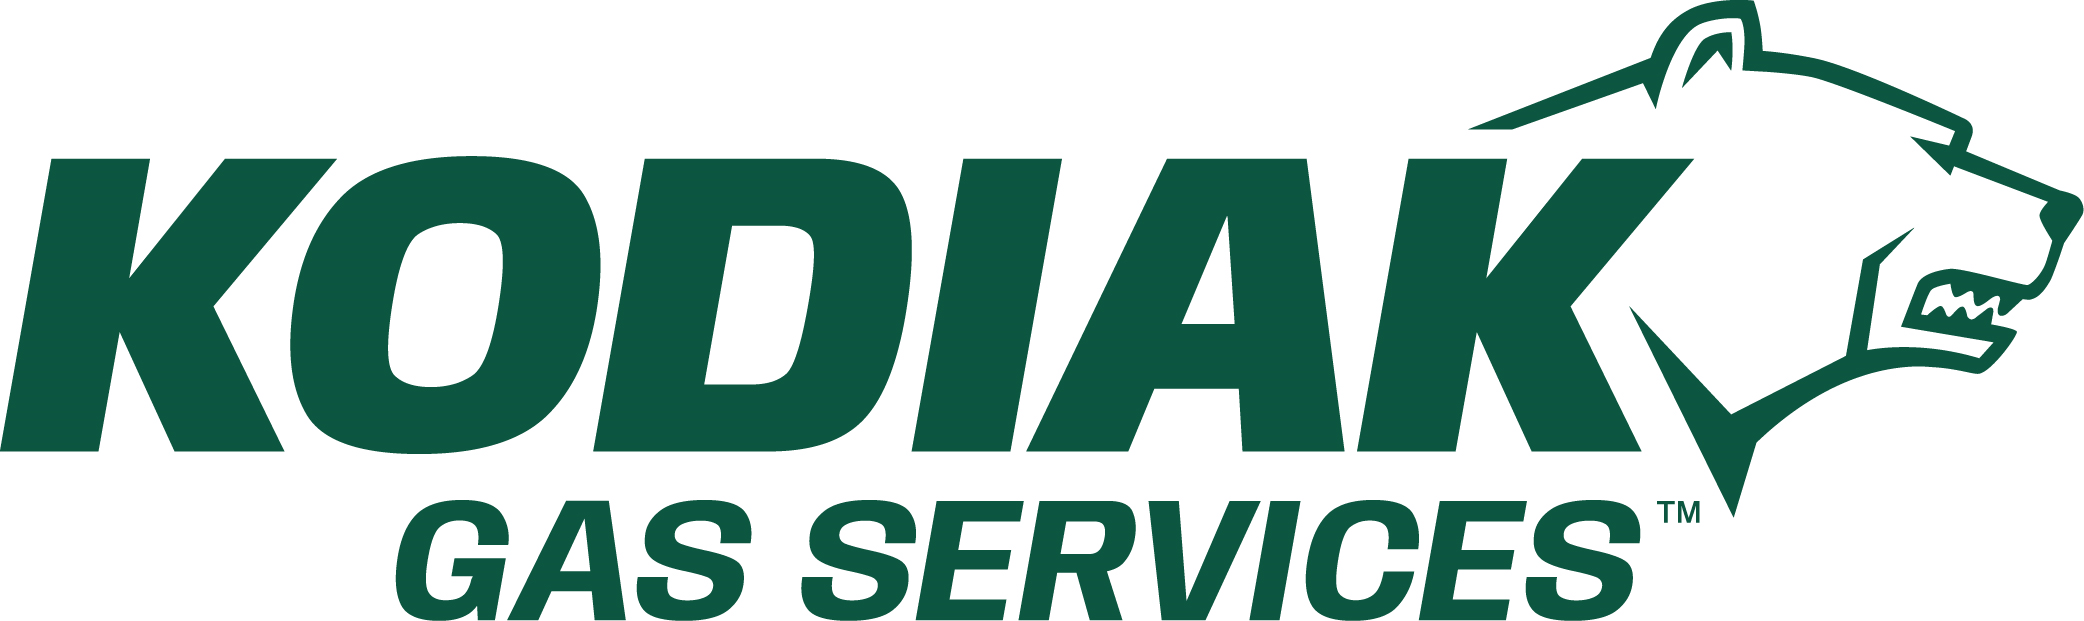 Kodiak Gas Services Company Logo